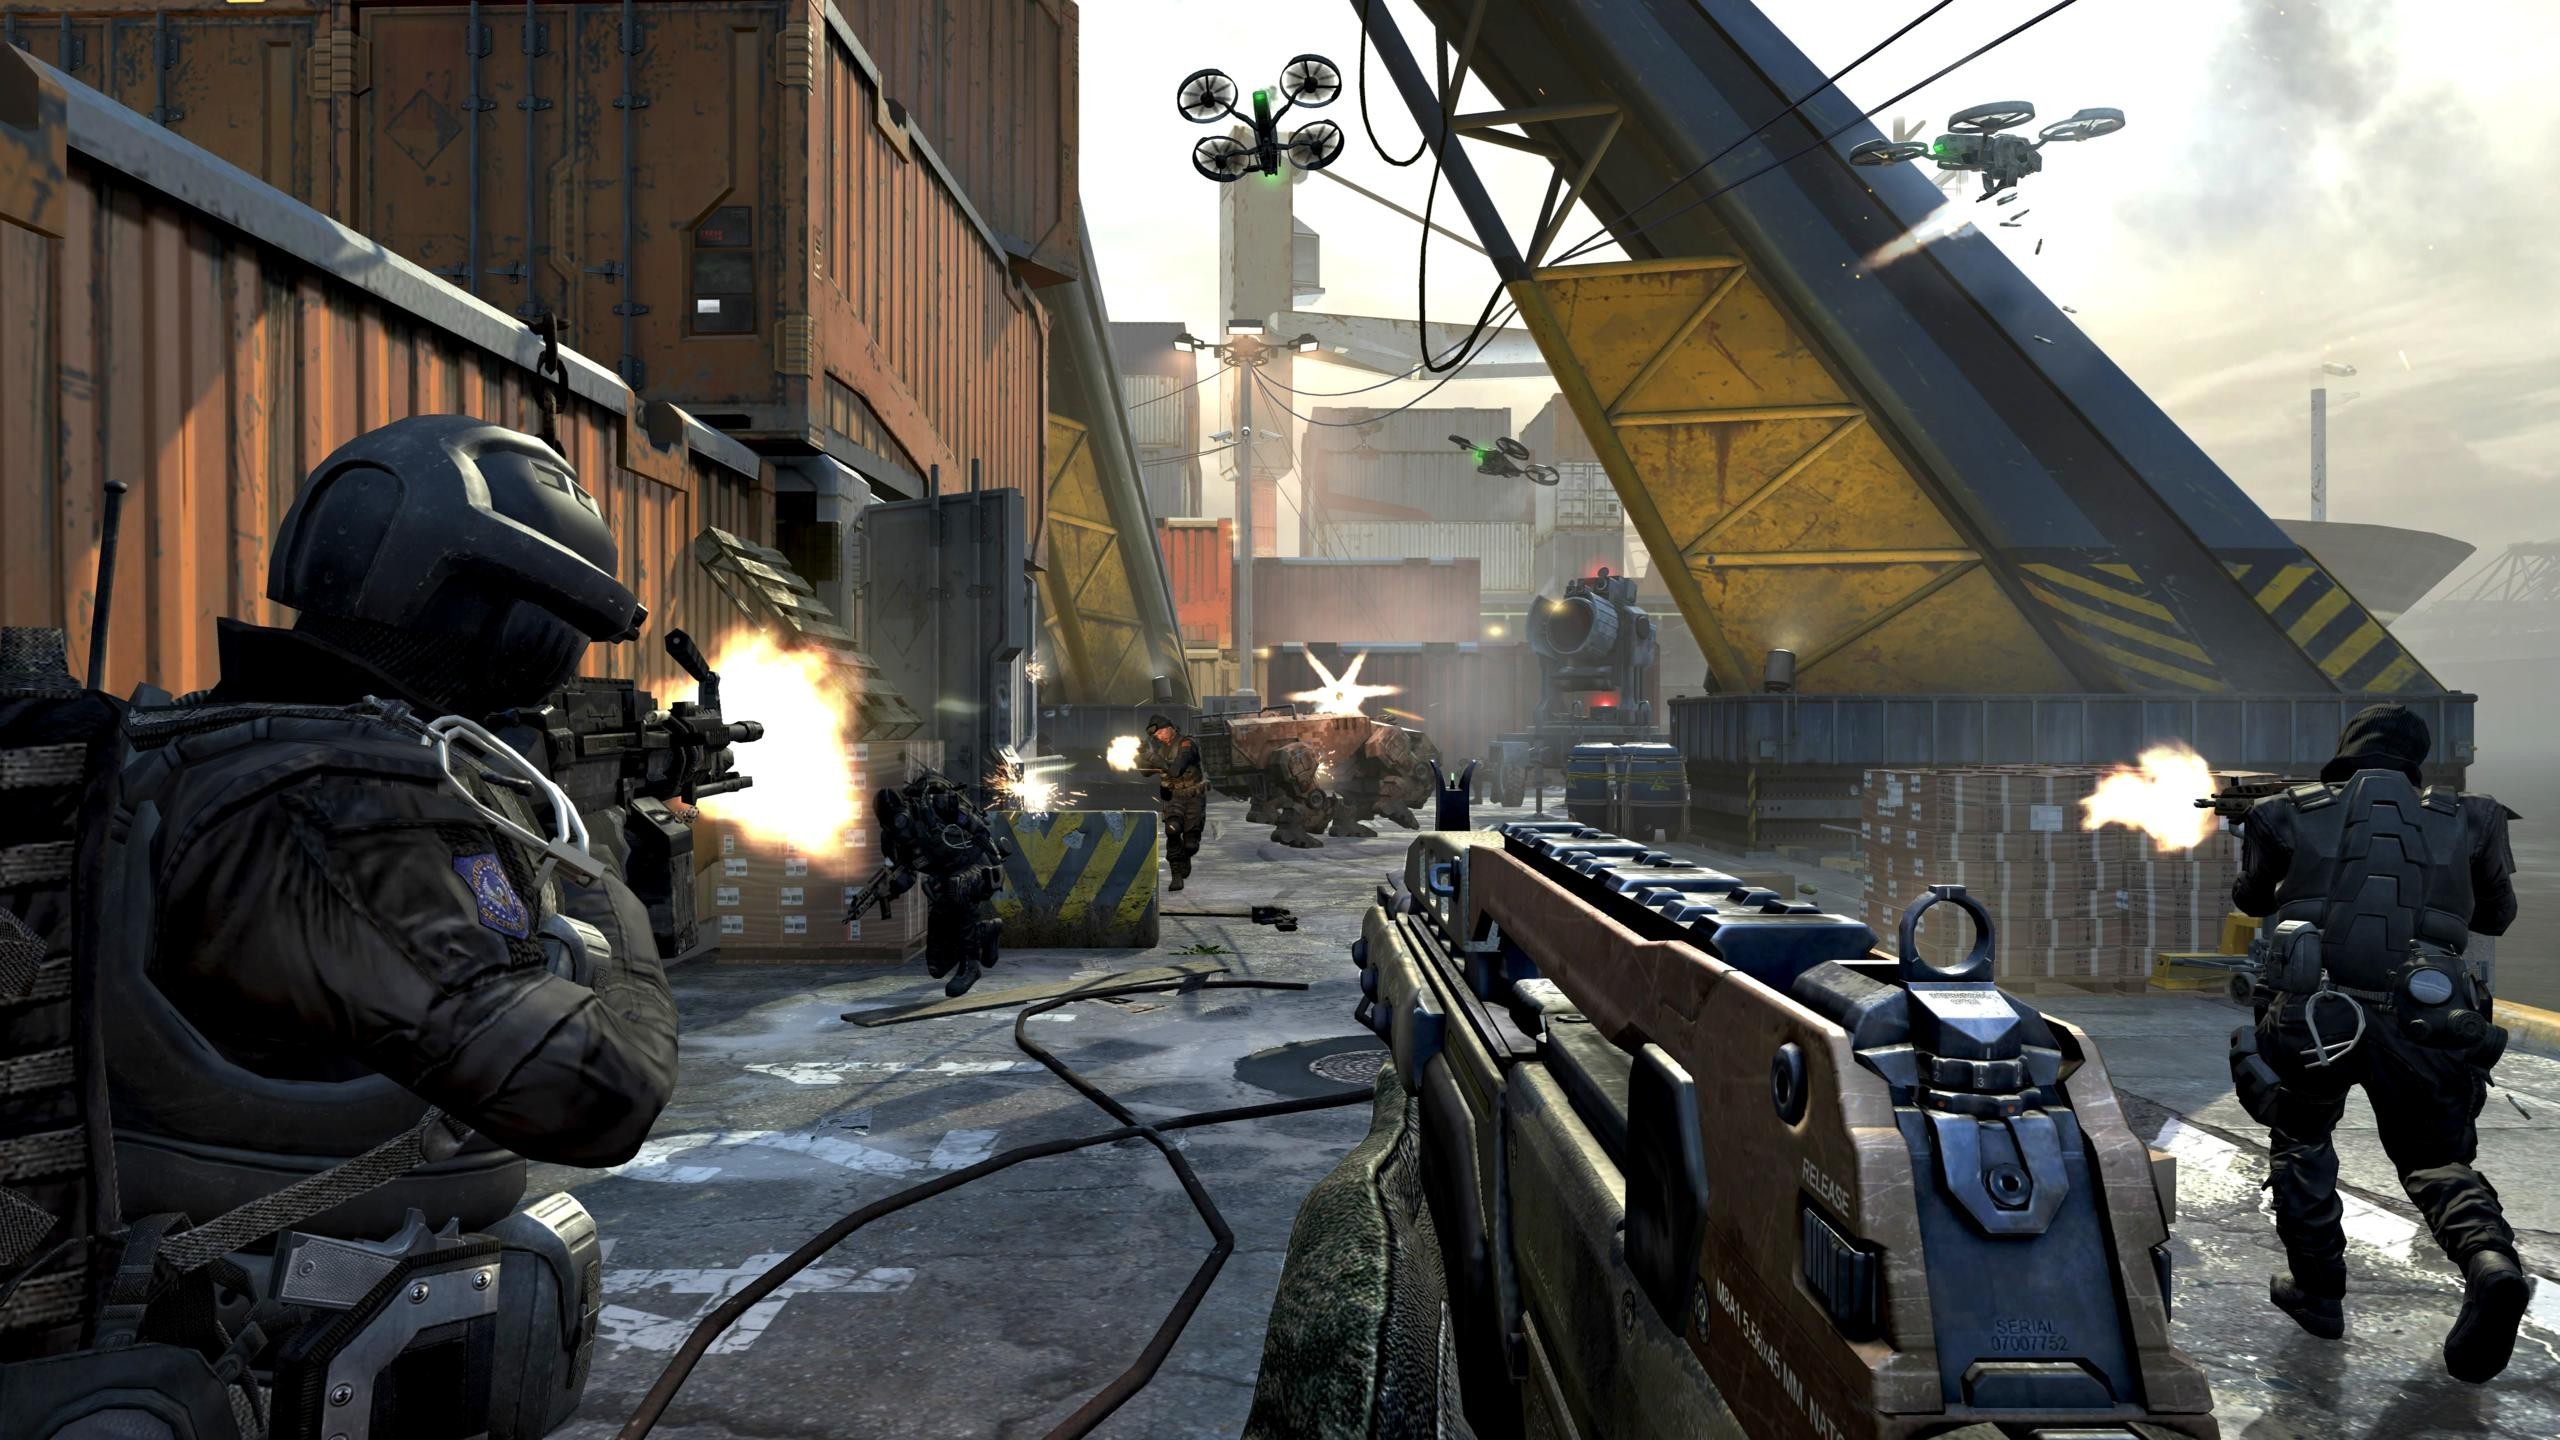 Baixar papel de parede para celular de Call Of Duty: Black Ops Ii, Call Of Duty, Videogame gratuito.